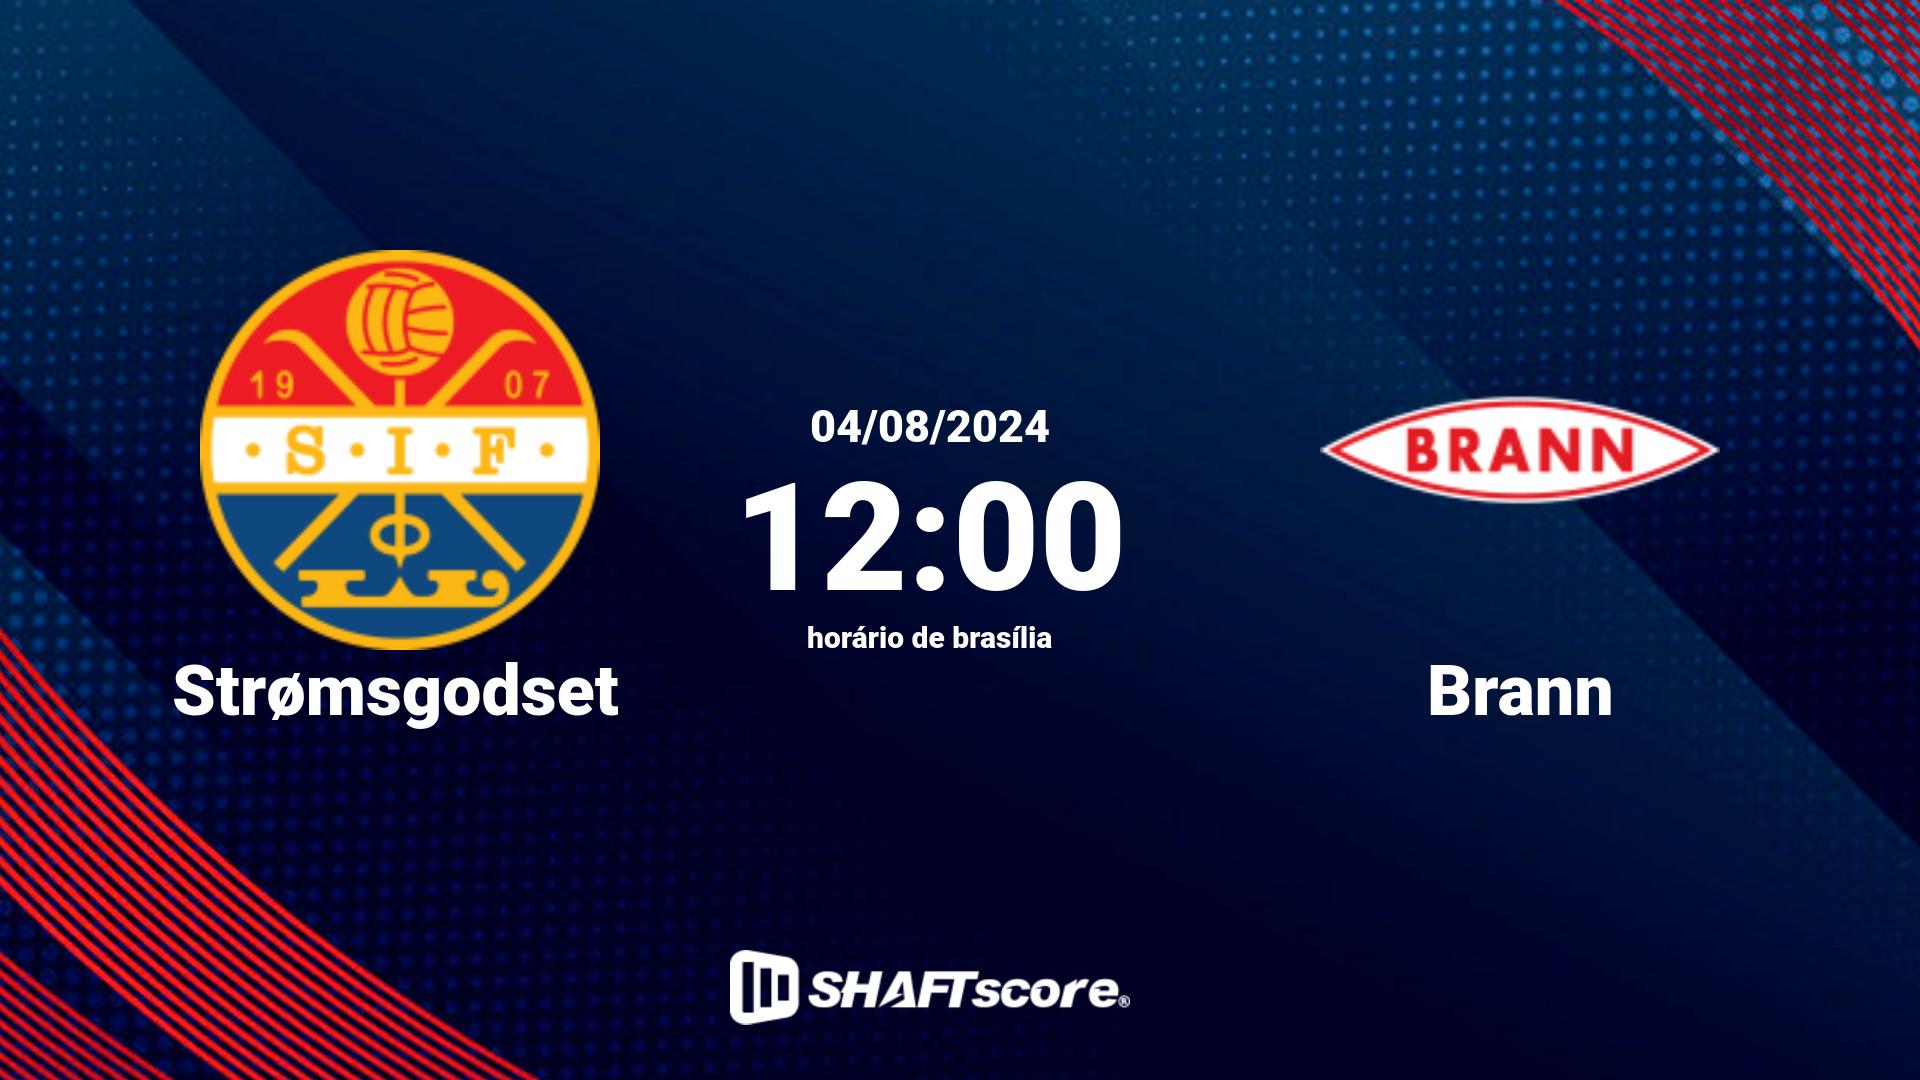 Estatísticas do jogo Strømsgodset vs Brann 04.08 12:00